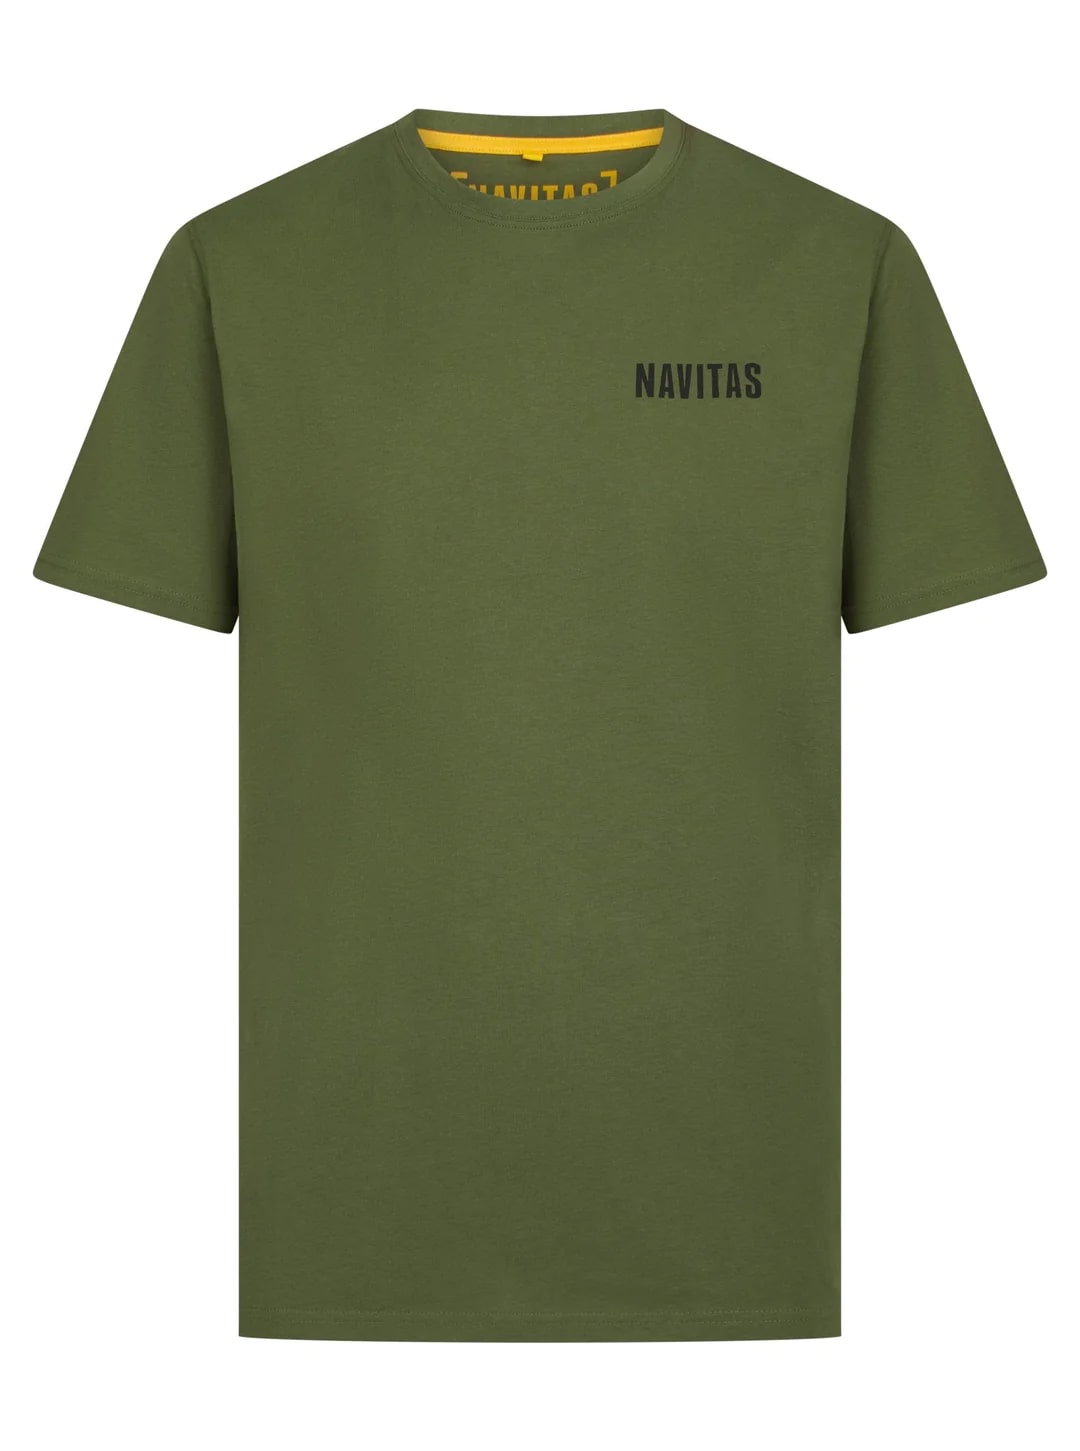 Navitas Diving Tee Camiseta de Pesca